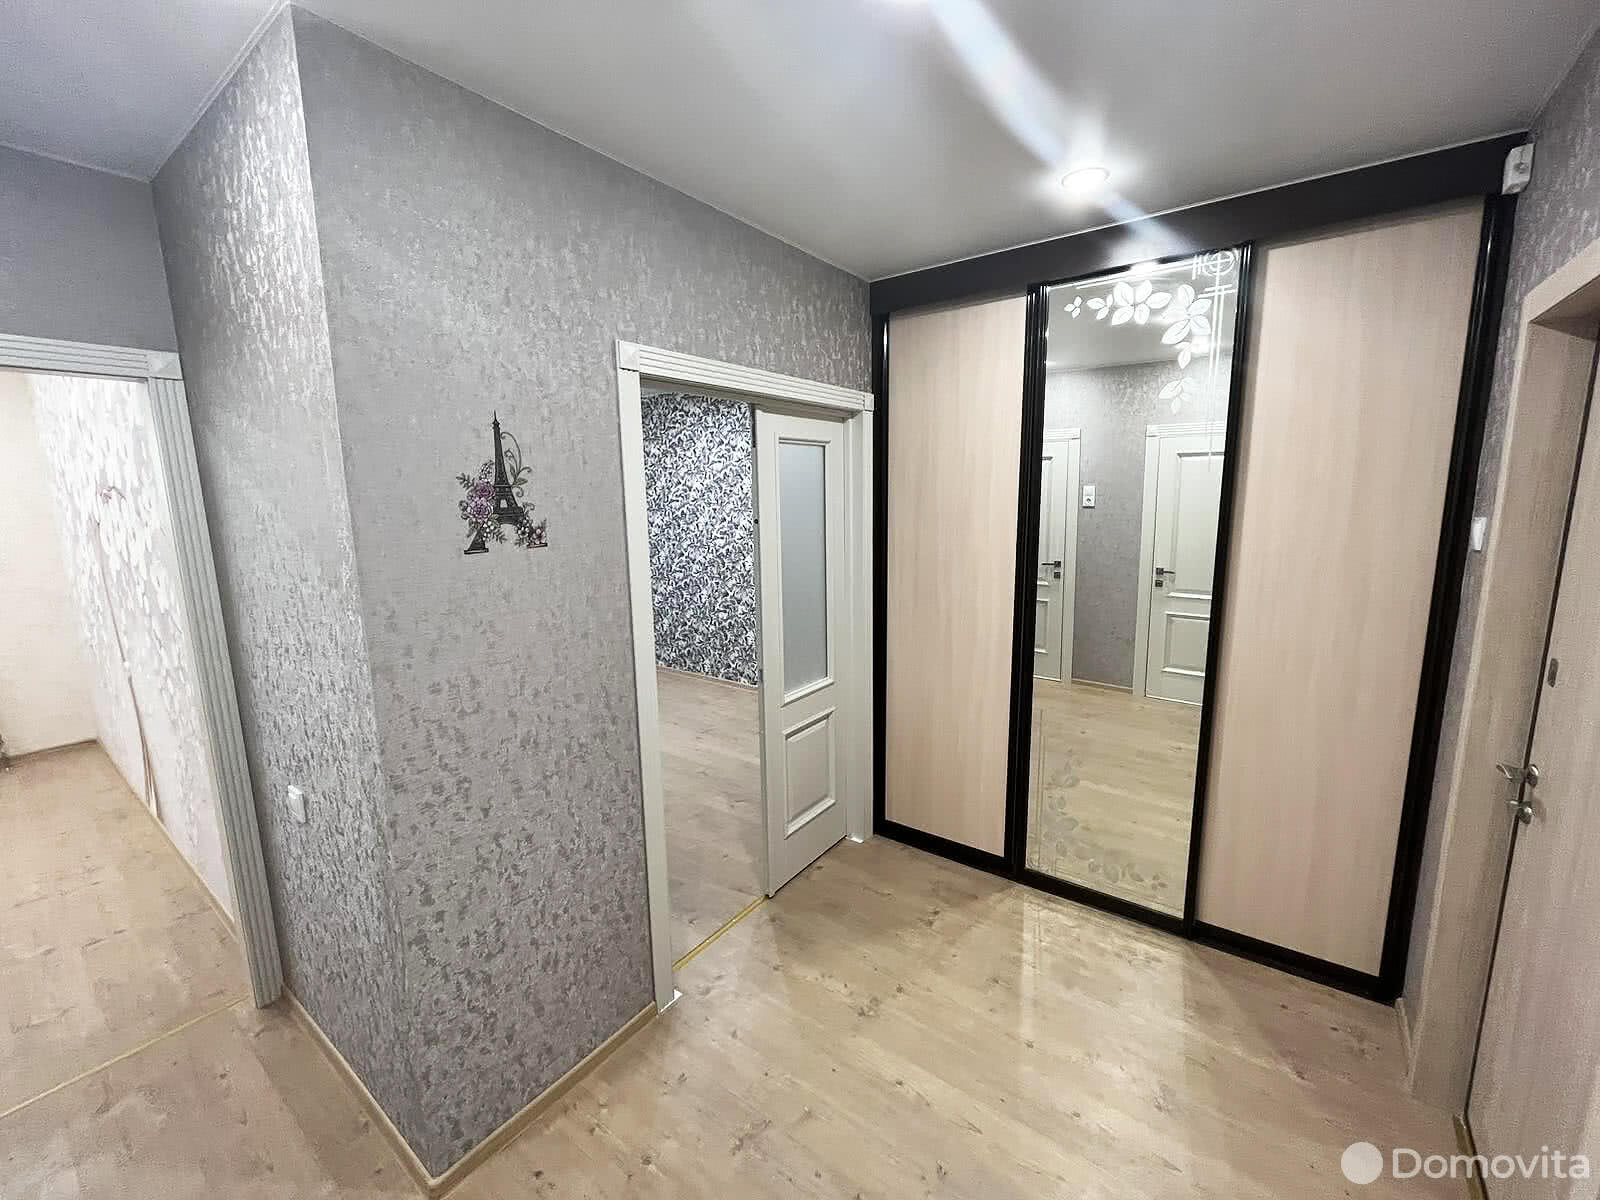 квартира, Барановичи, ул. Александра Волошина, д. 13, стоимость продажи 99 906 р.